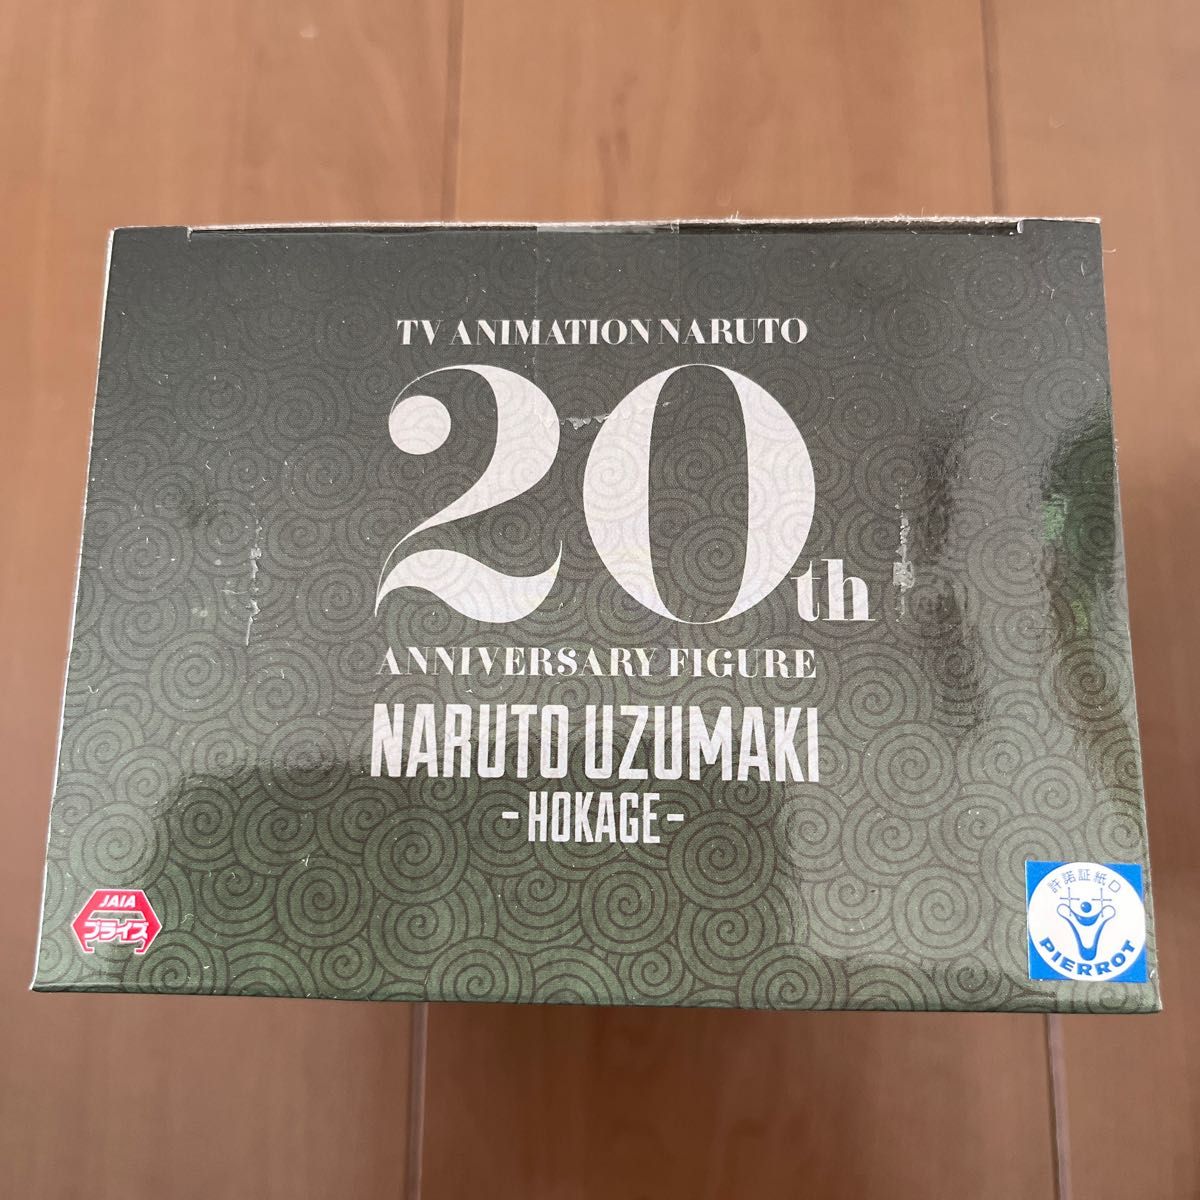 NARUTO-ナルト- TVアニメ20周年記念 うずまきナルト-火影- 全1種 フィギュア